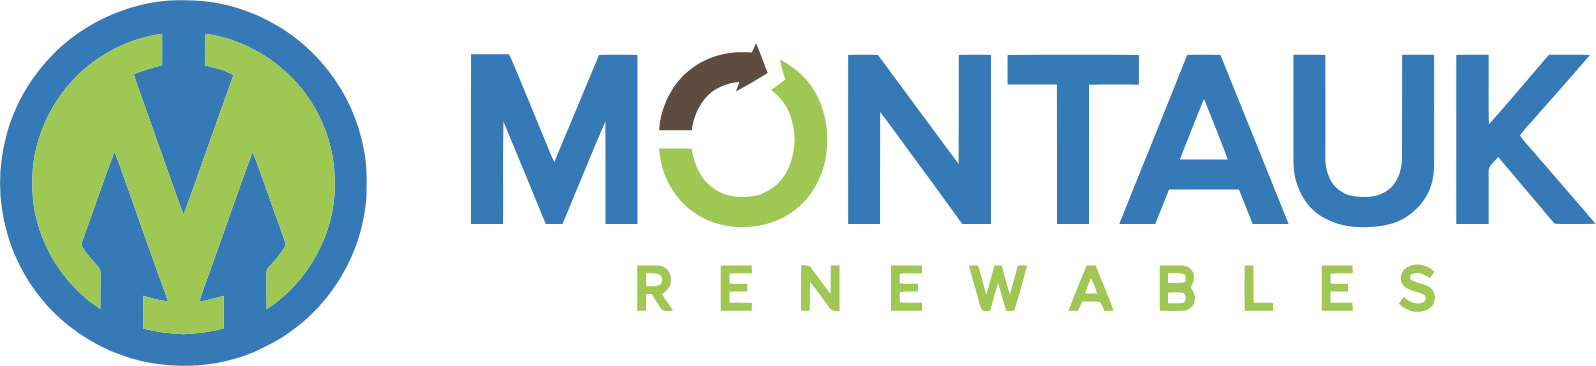 Montauk Renewables logo large (transparent PNG)